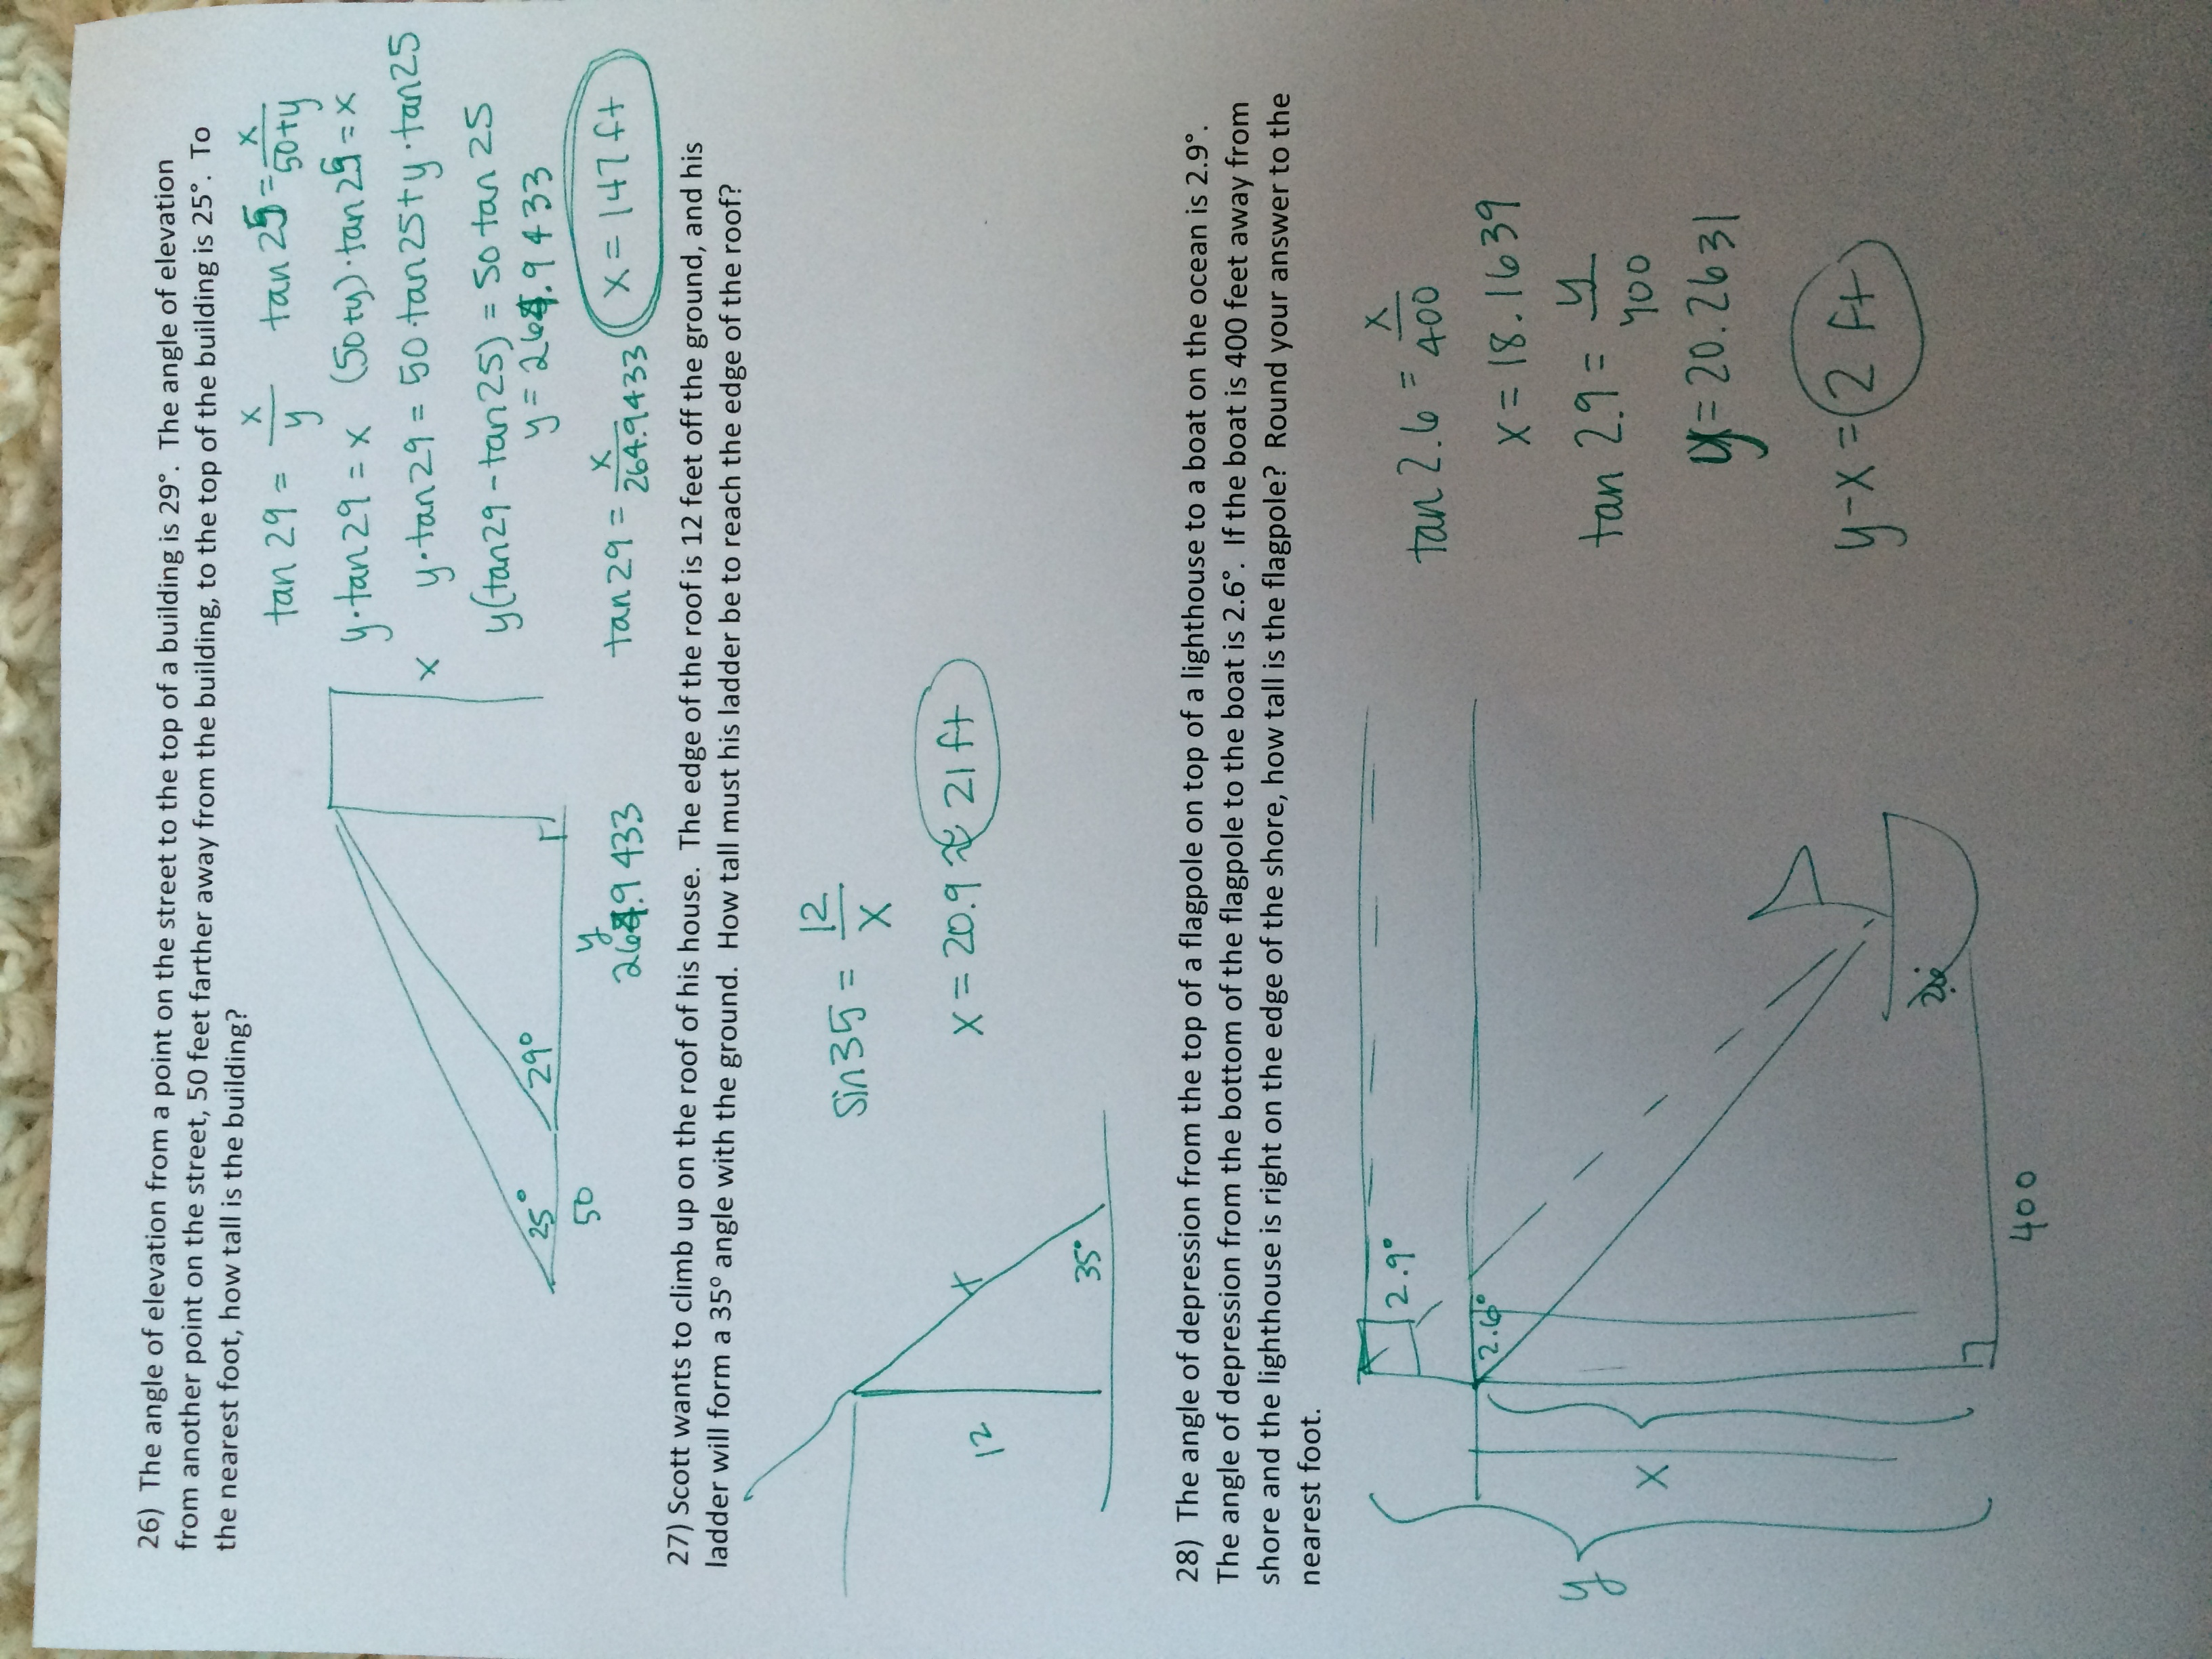 Geometry homework practice workbook answers